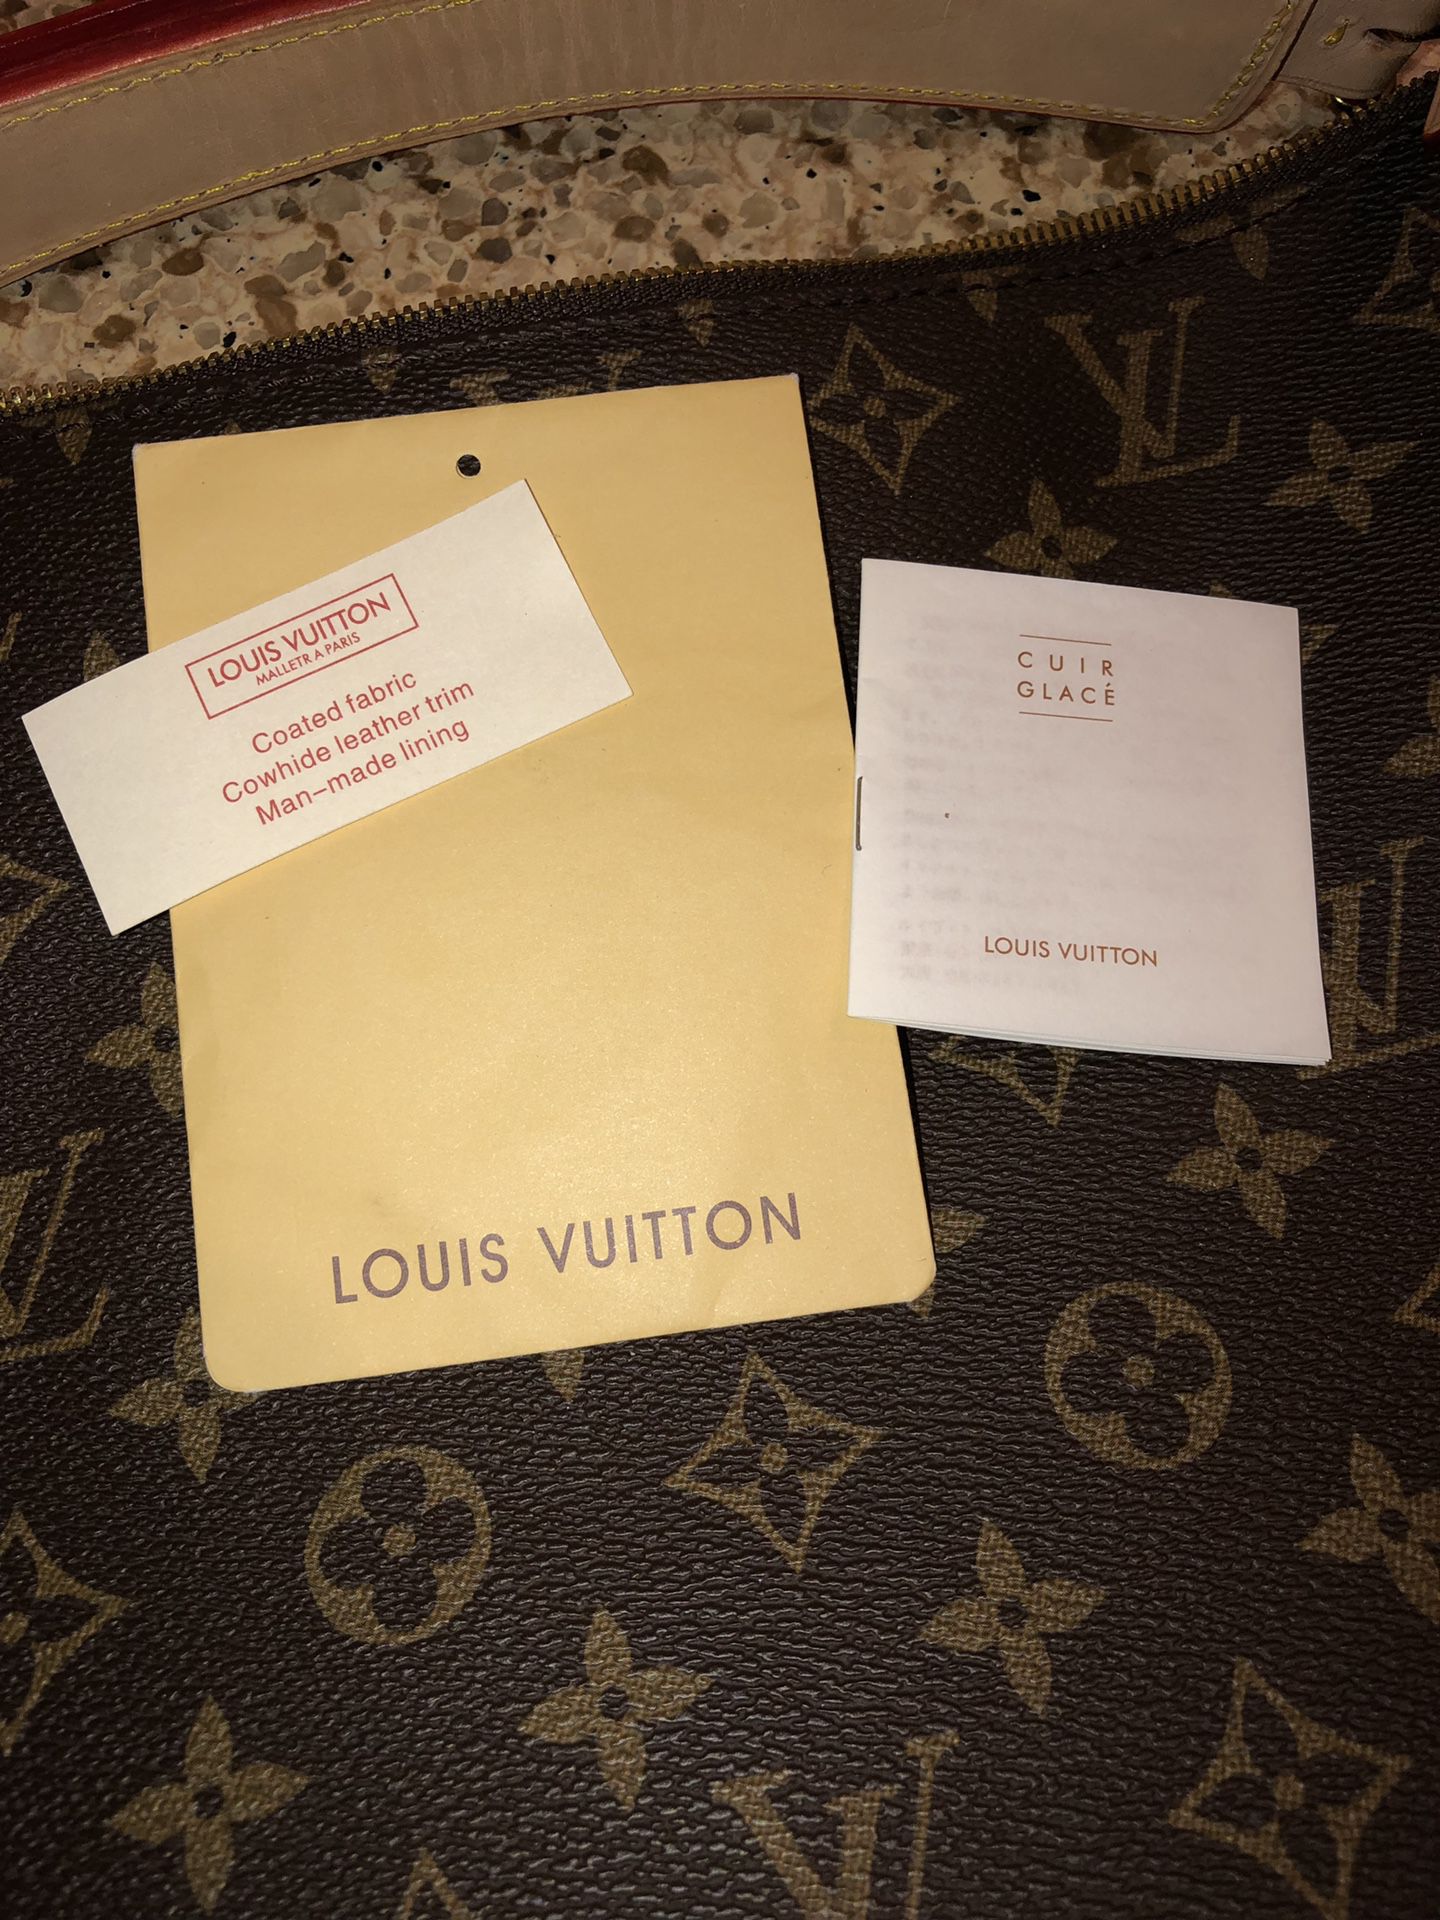 A Louis Vuitton Sully MM bag 2012. - Bukowskis